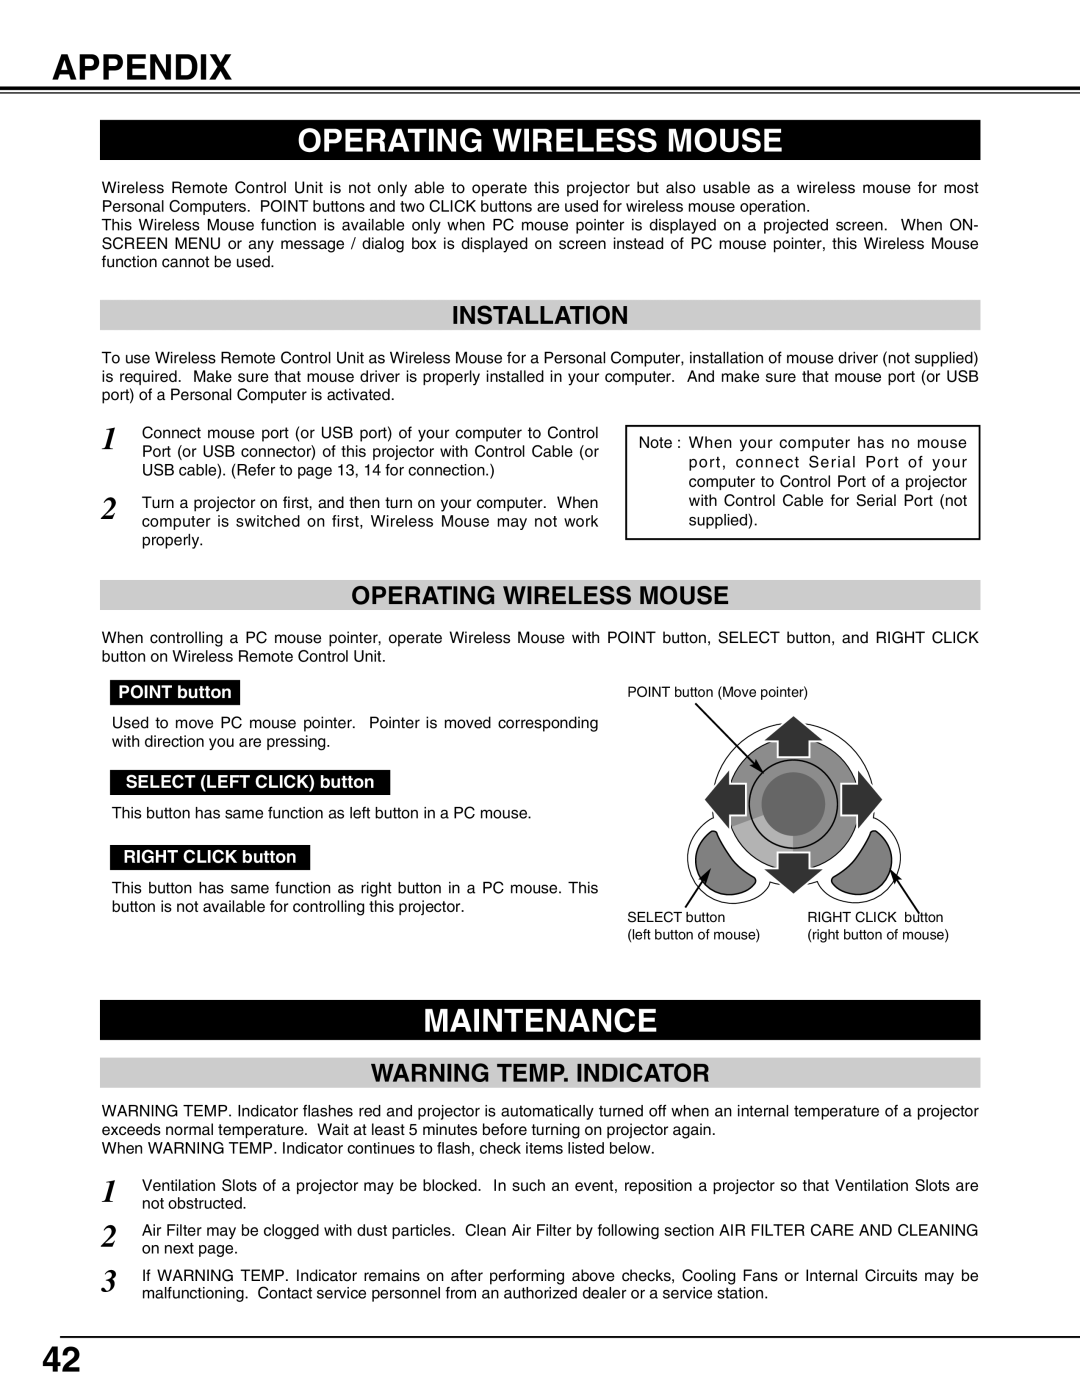 Eiki LC-SX4LA instruction manual Appendix, Operating Wireless Mouse, Maintenance, Installation, Warning Temp. Indicator 